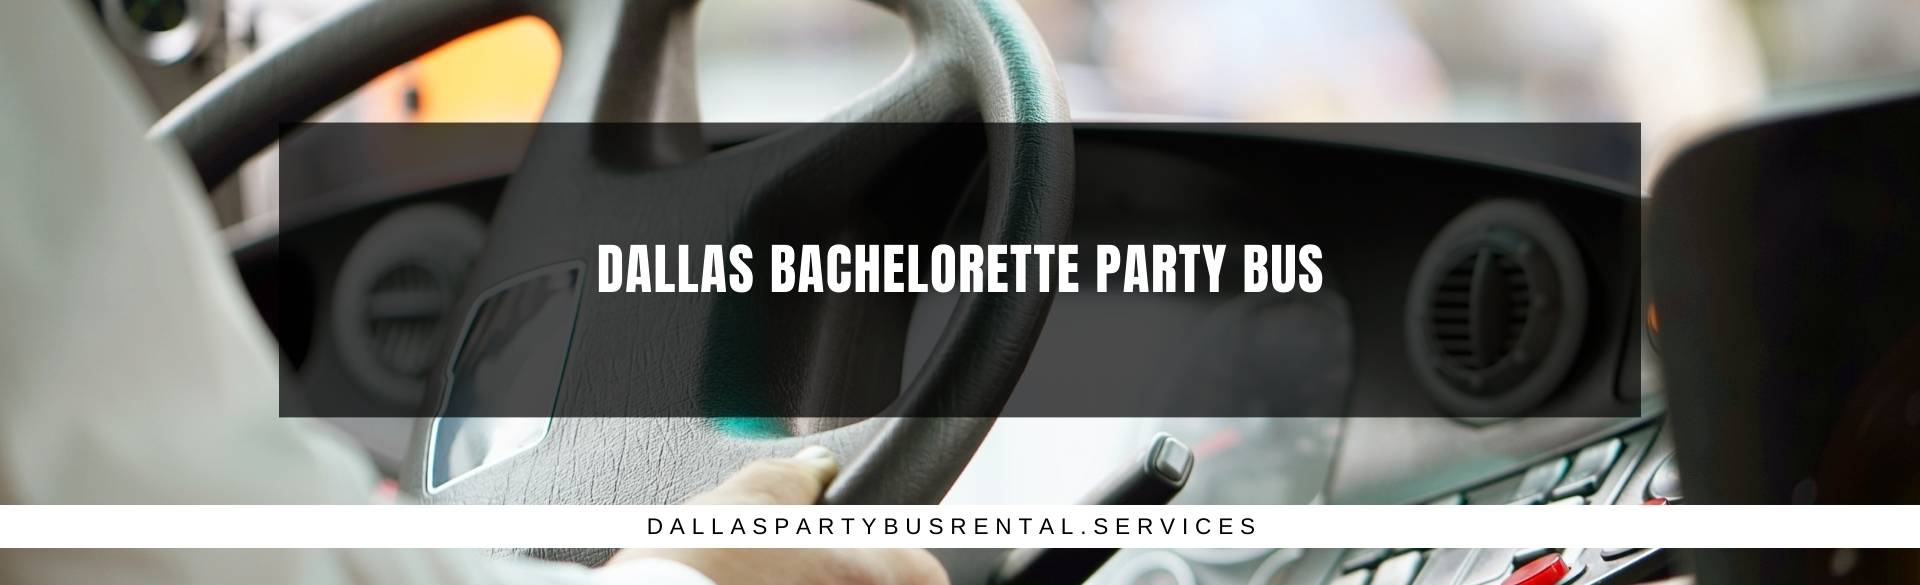 Dallas Bachelorette Party Bus